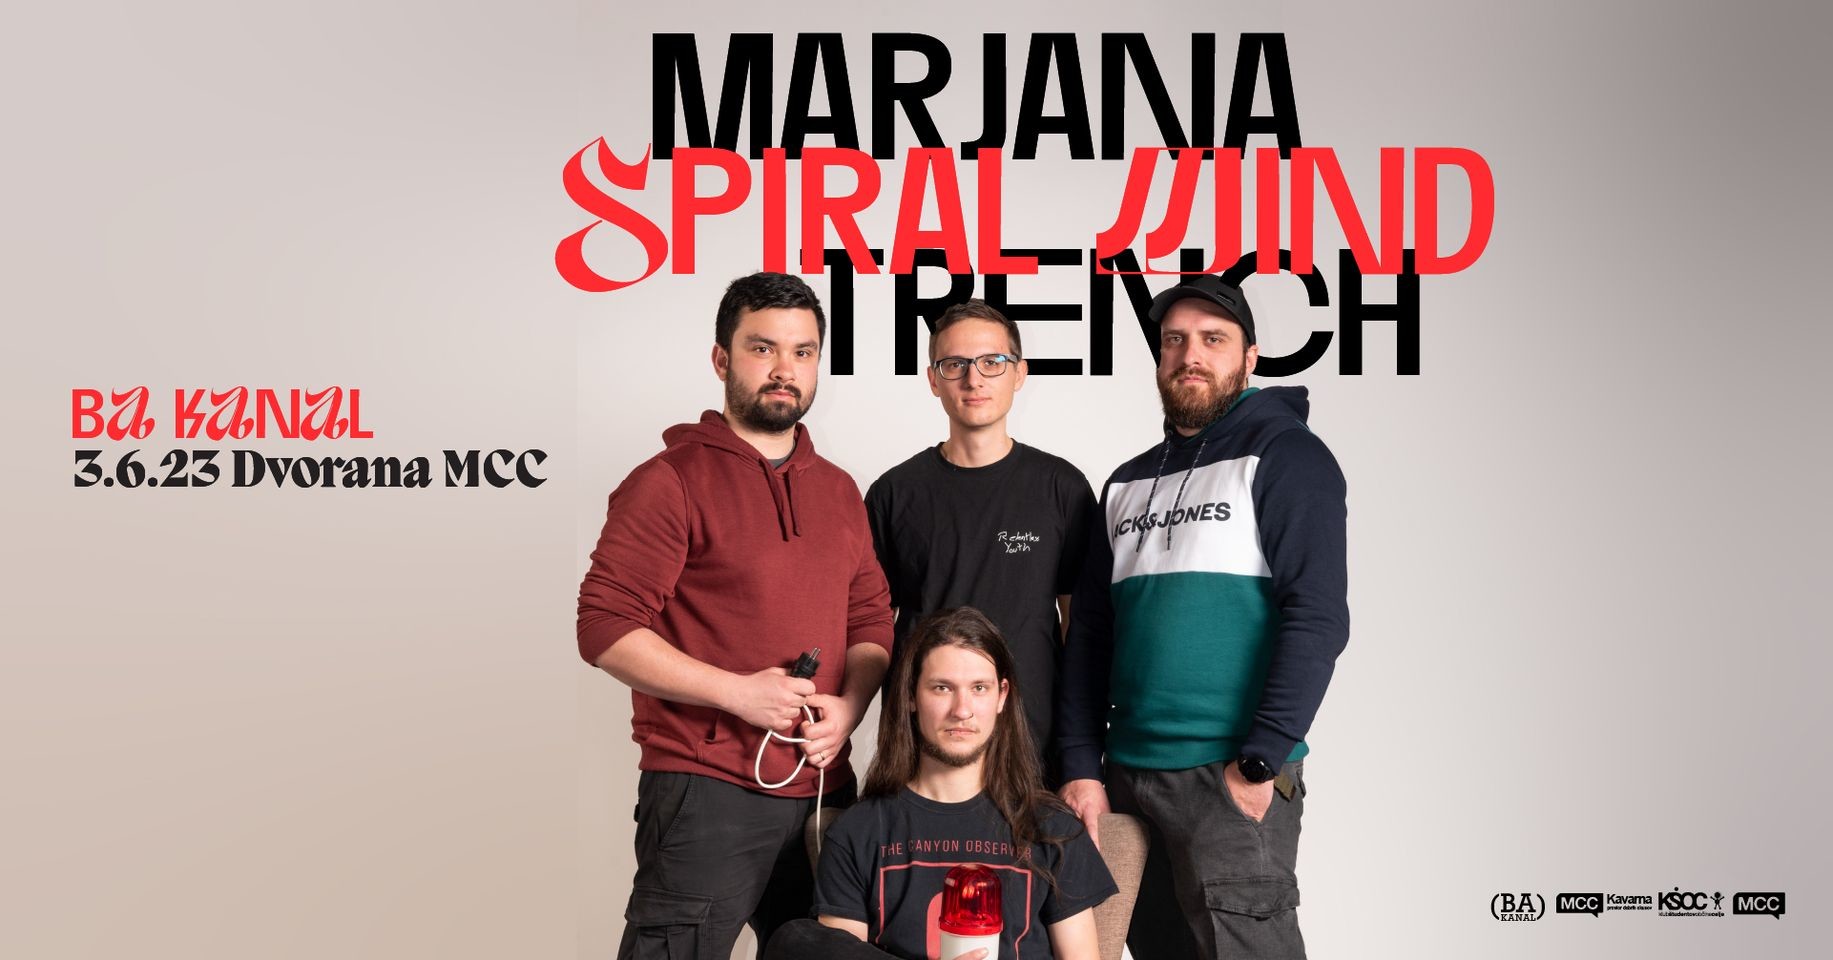 SPIRAL MIND + Marjana Trench | Ba kanal